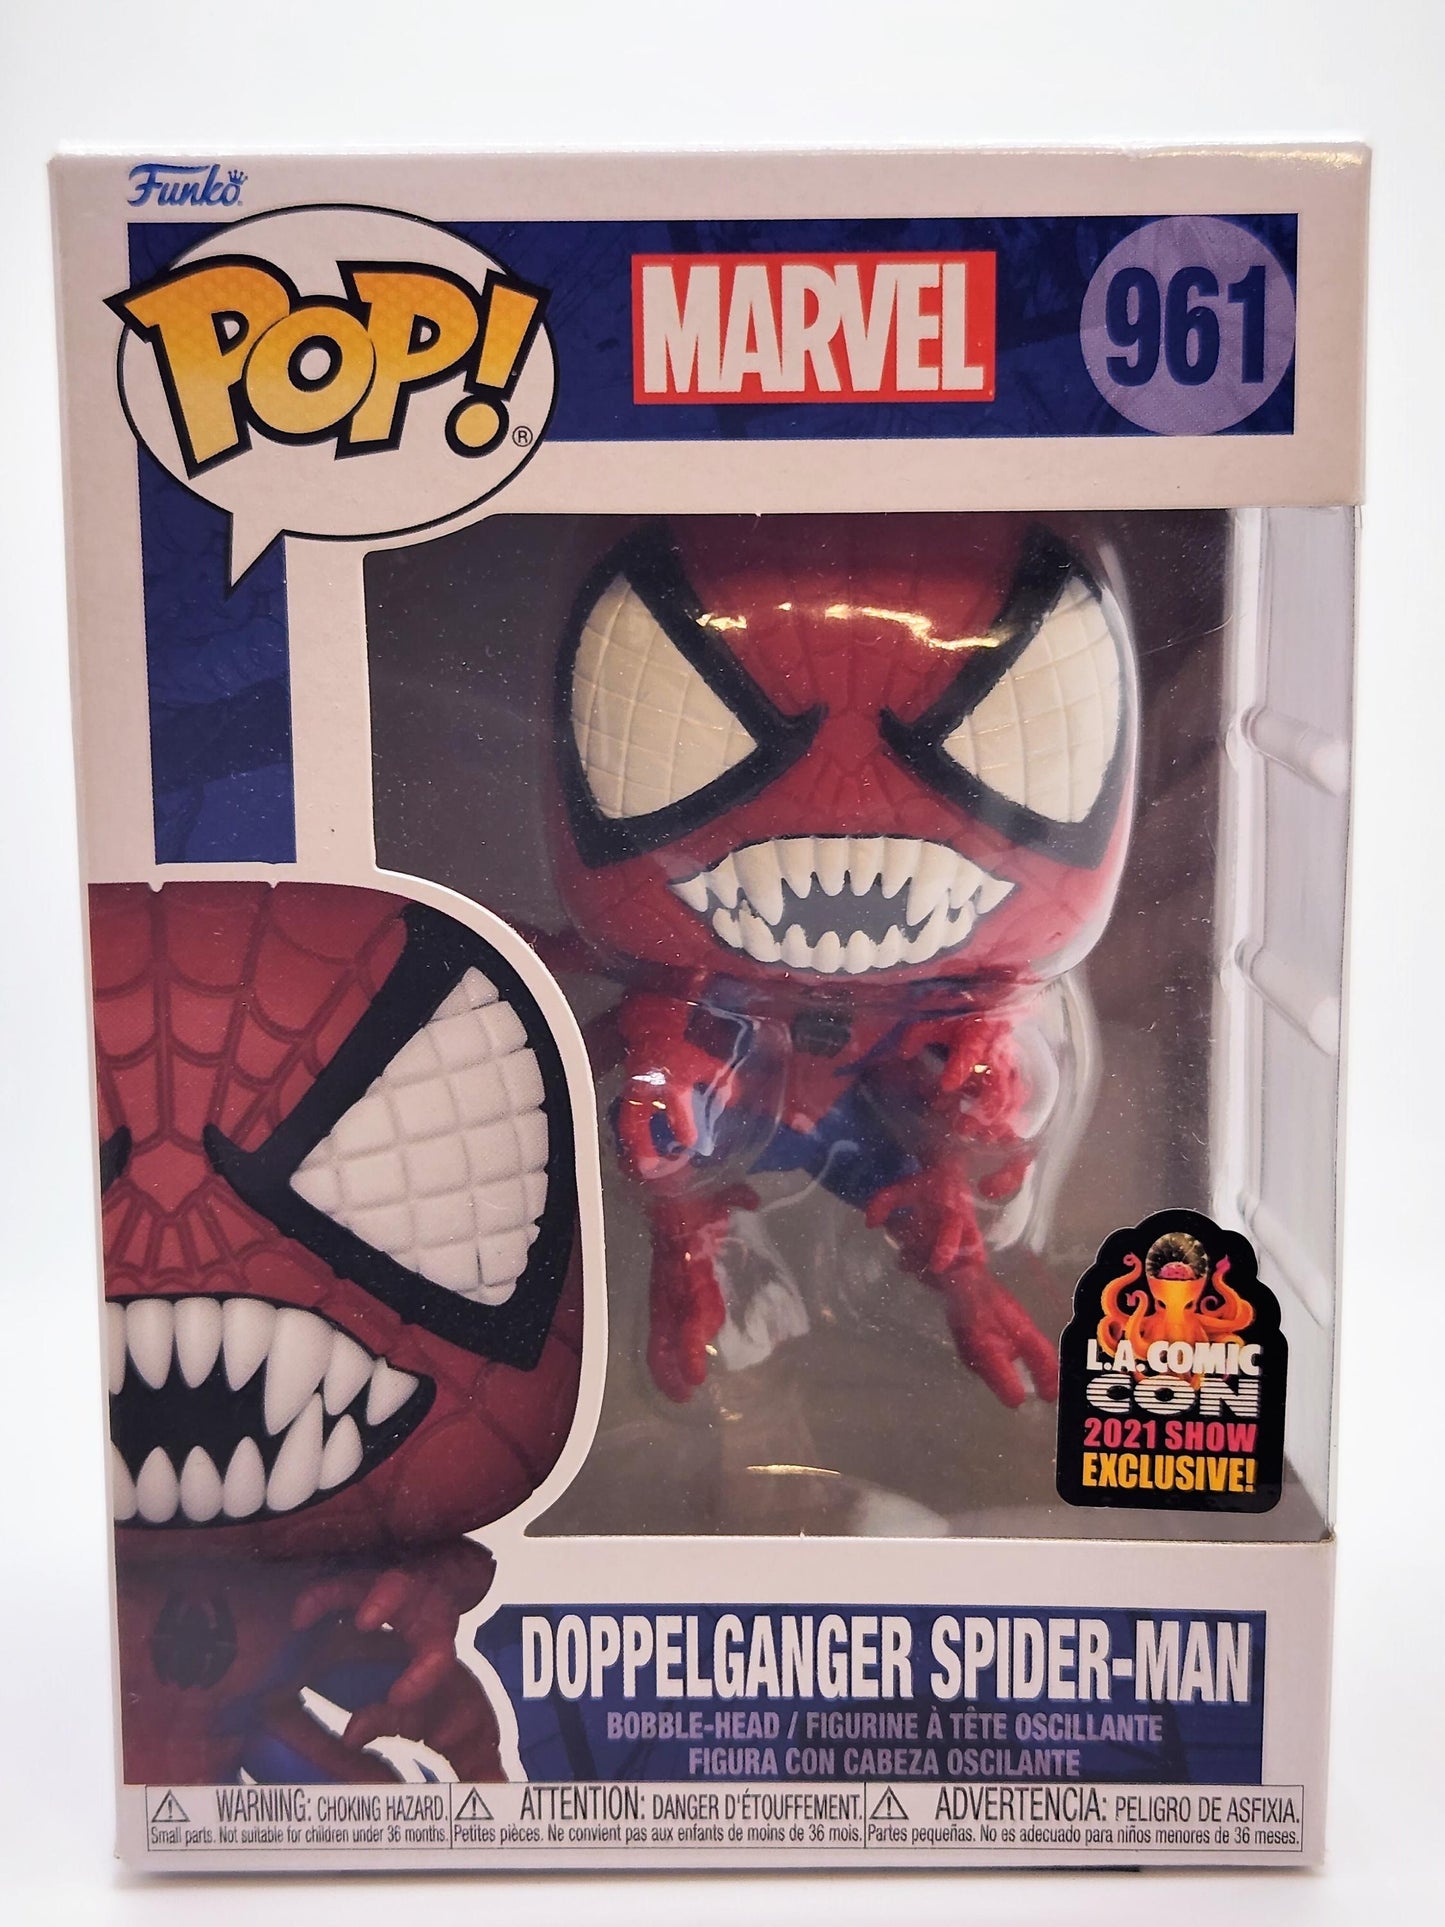 Doppelganger Spider-Man - #961 - 2021 LACC - Condition 9/10